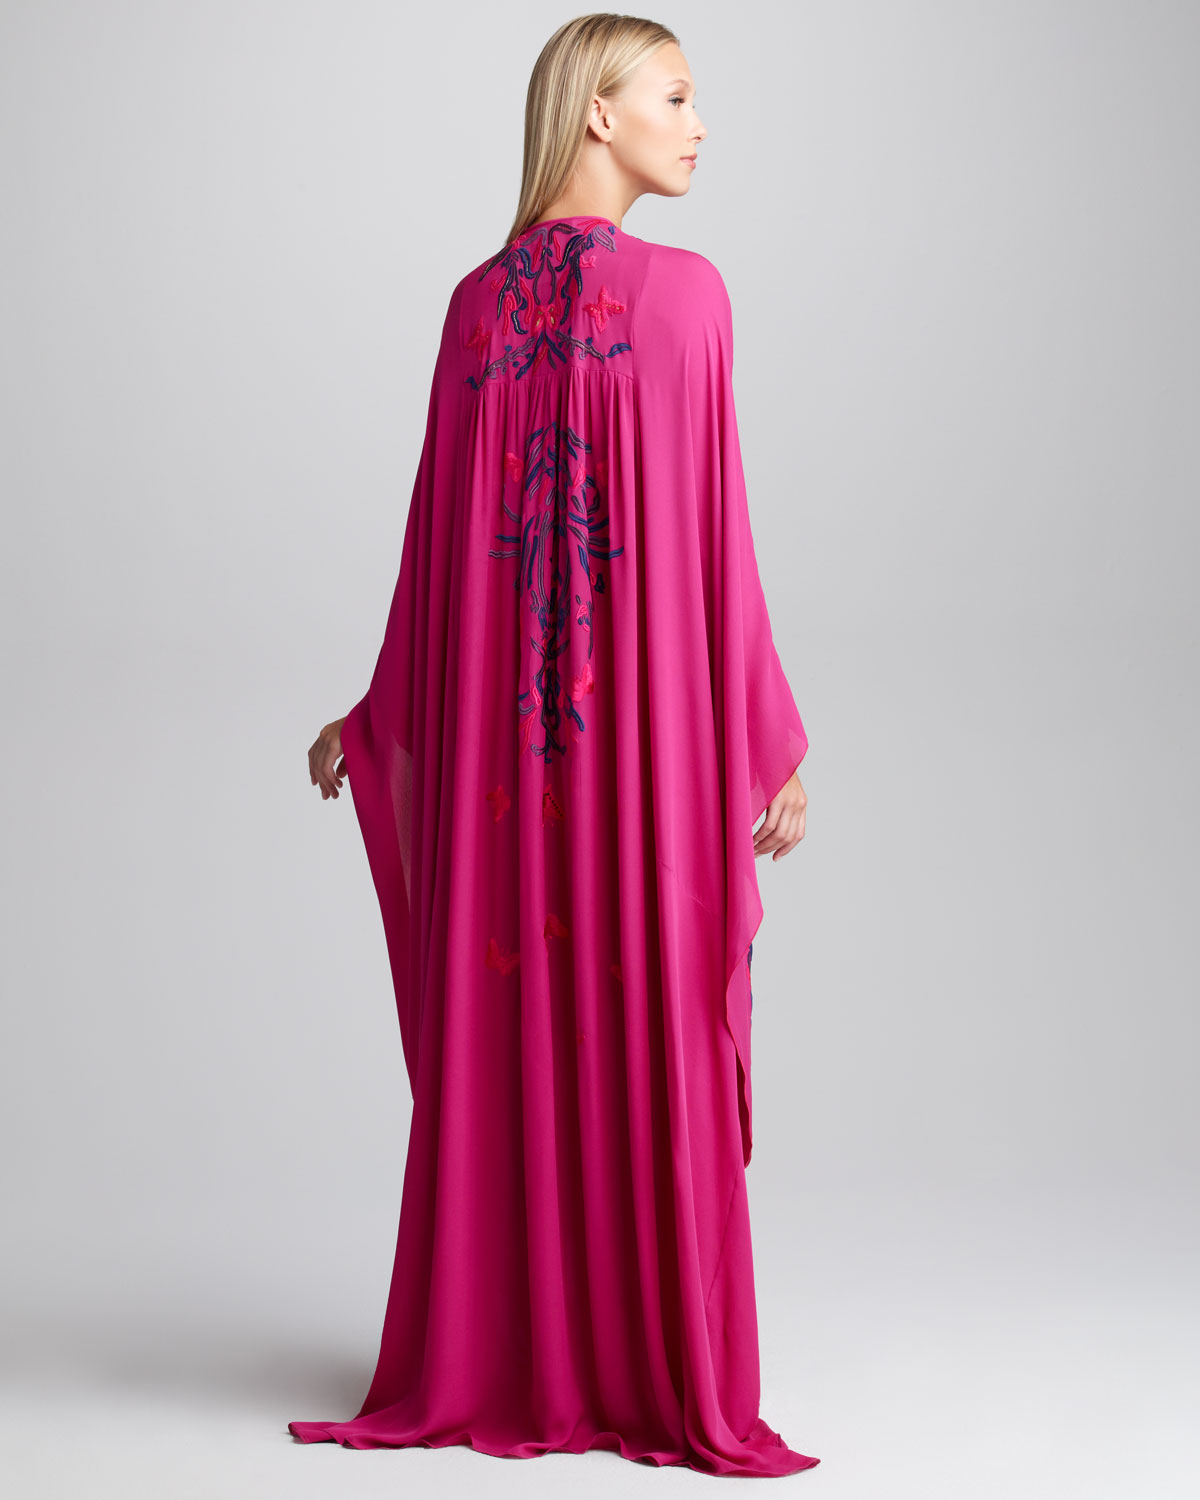 Lyst - Emilio Pucci Broidered Silk Caftan in Pink